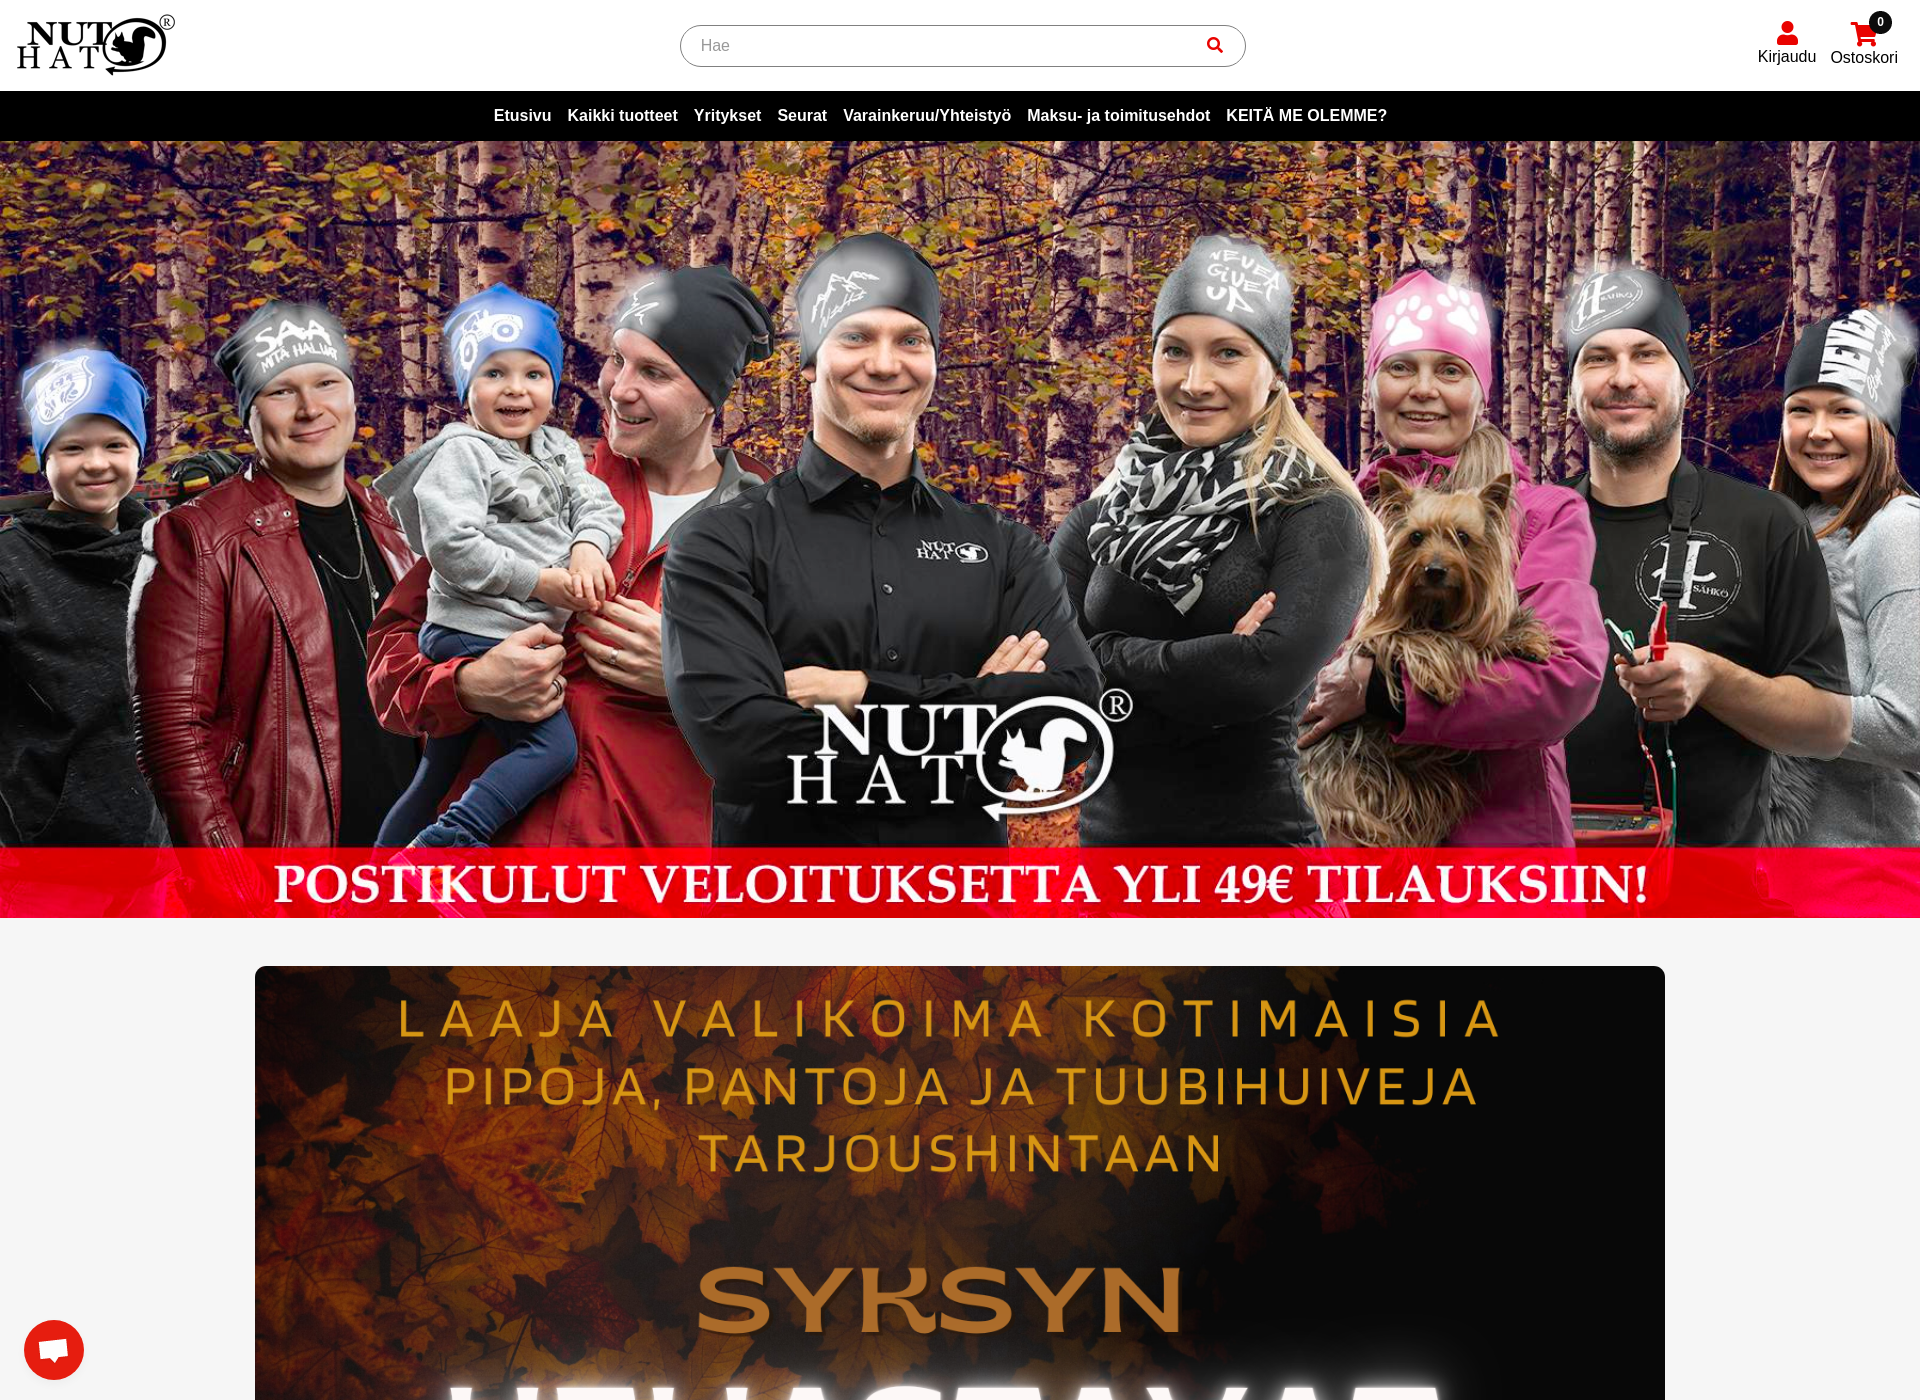 Skärmdump för tahtituote.fi